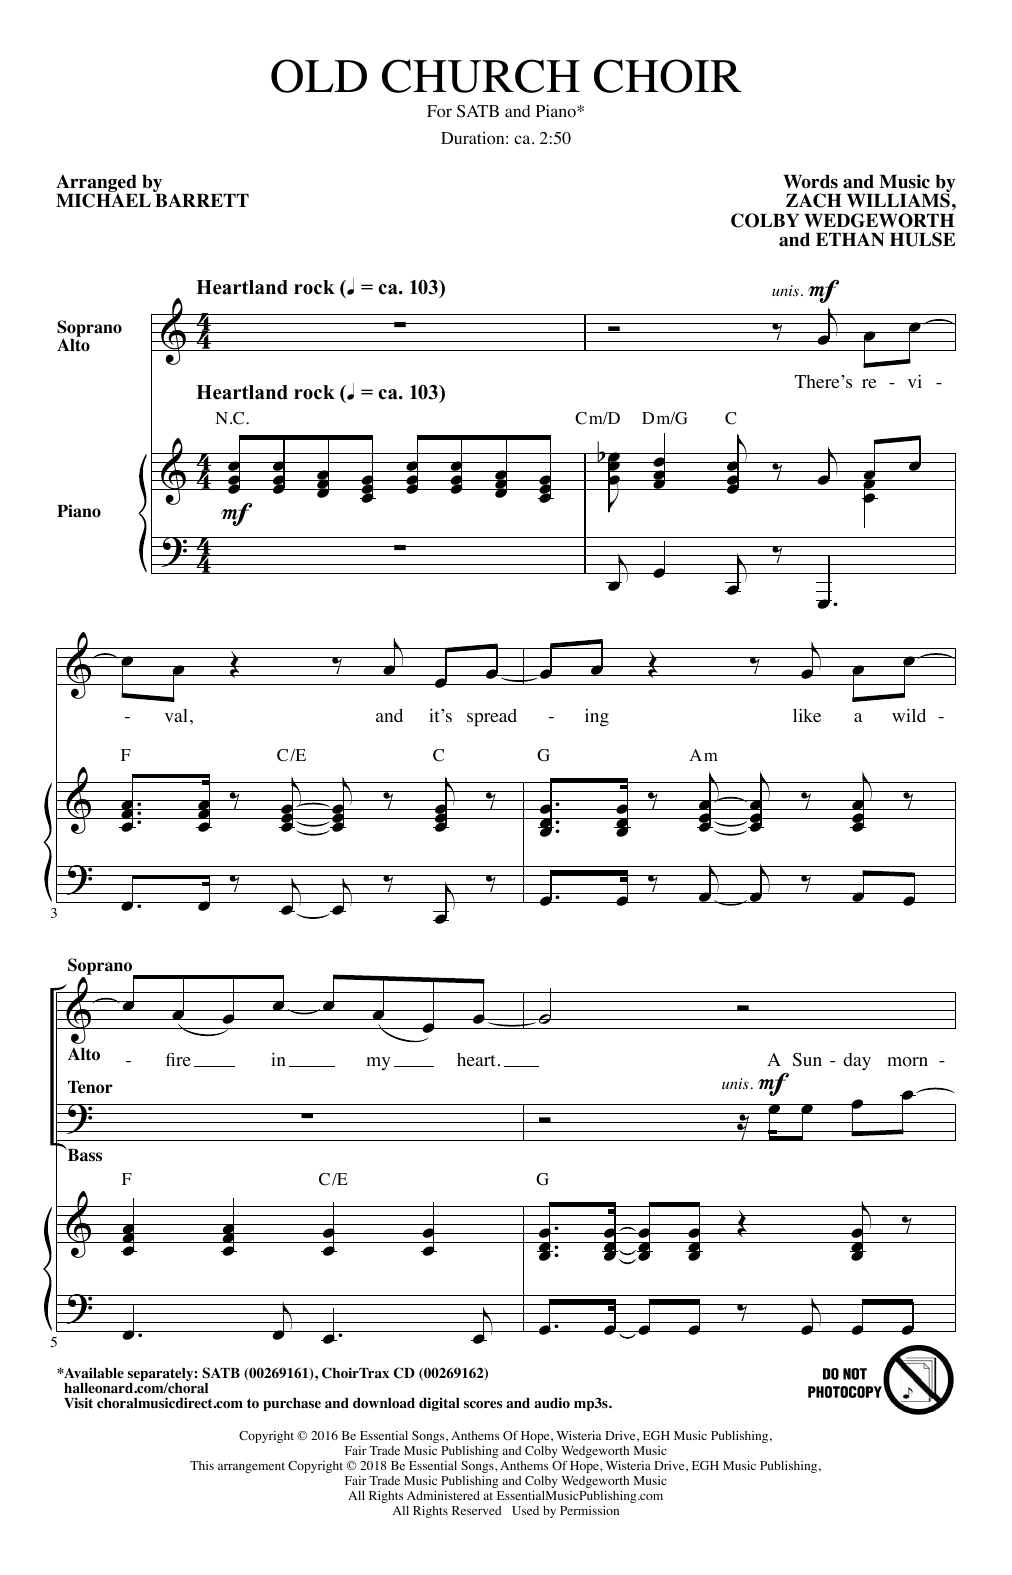 Download Zach Williams Old Church Choir (arr. Michael Barrett) Sheet Music